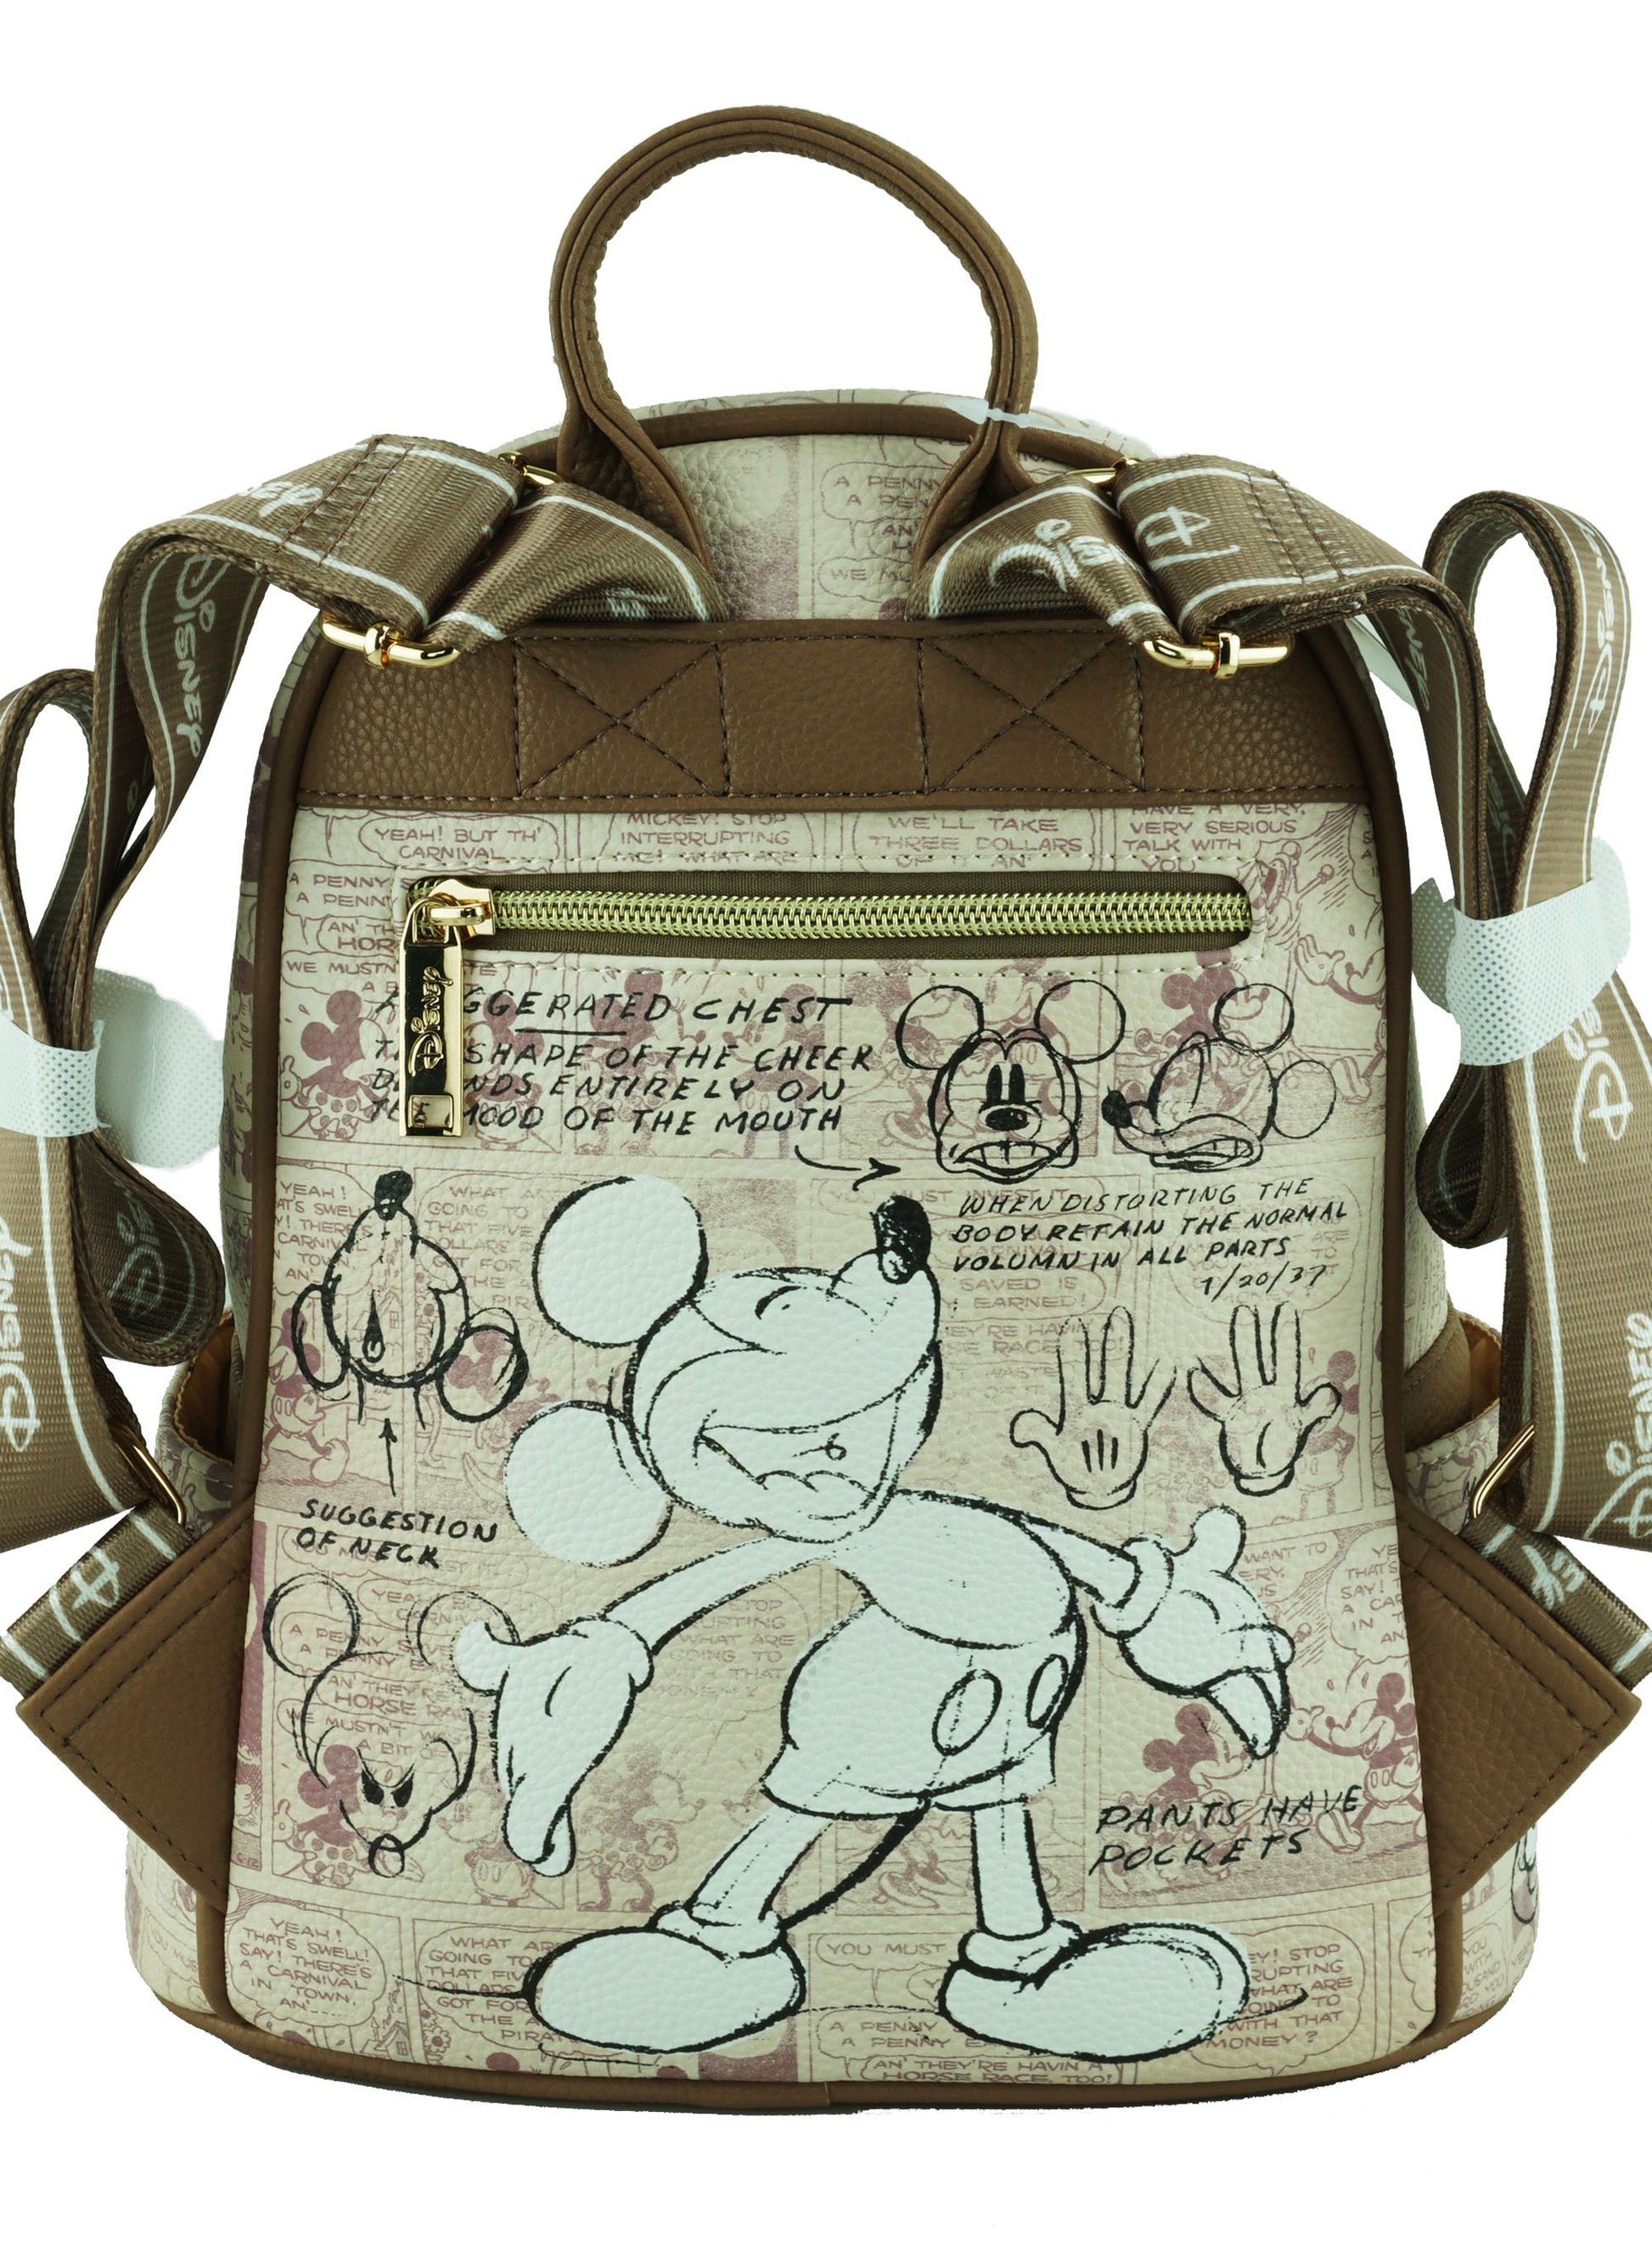 Disney Donald Duck 11-inch Vegan Leather Mini Backpack